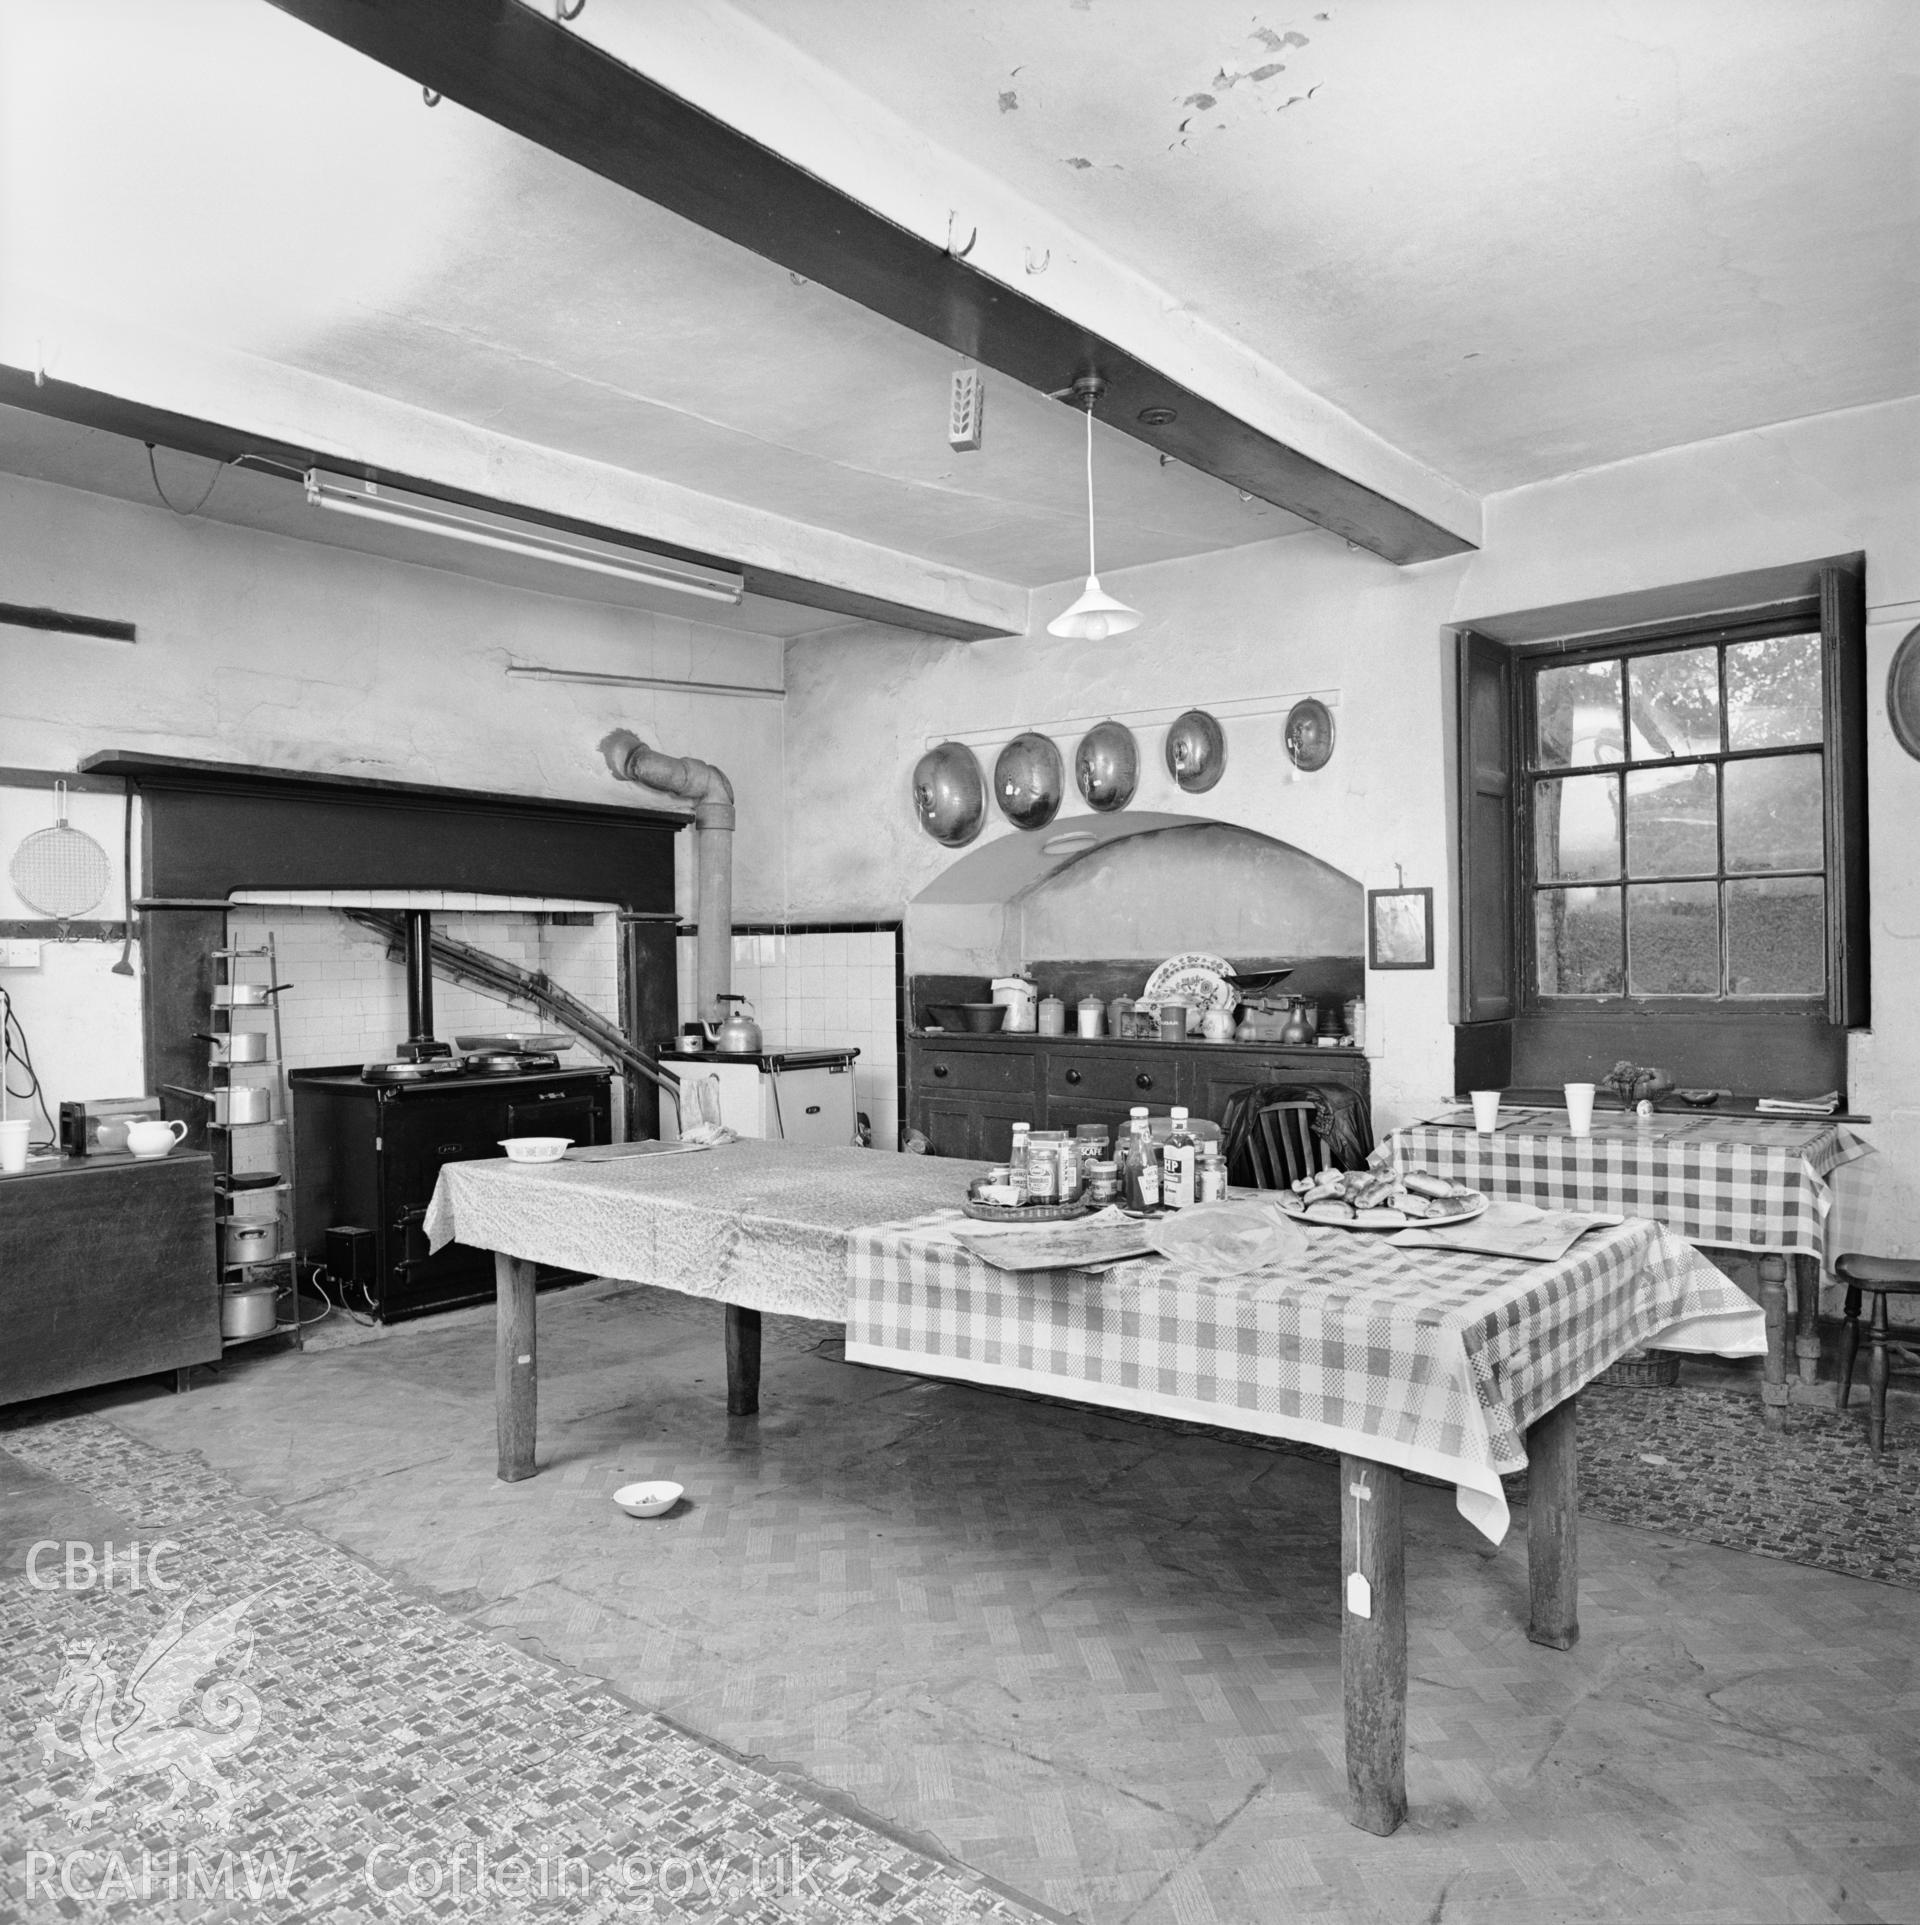 The Main Kitchen at Penpont Manor